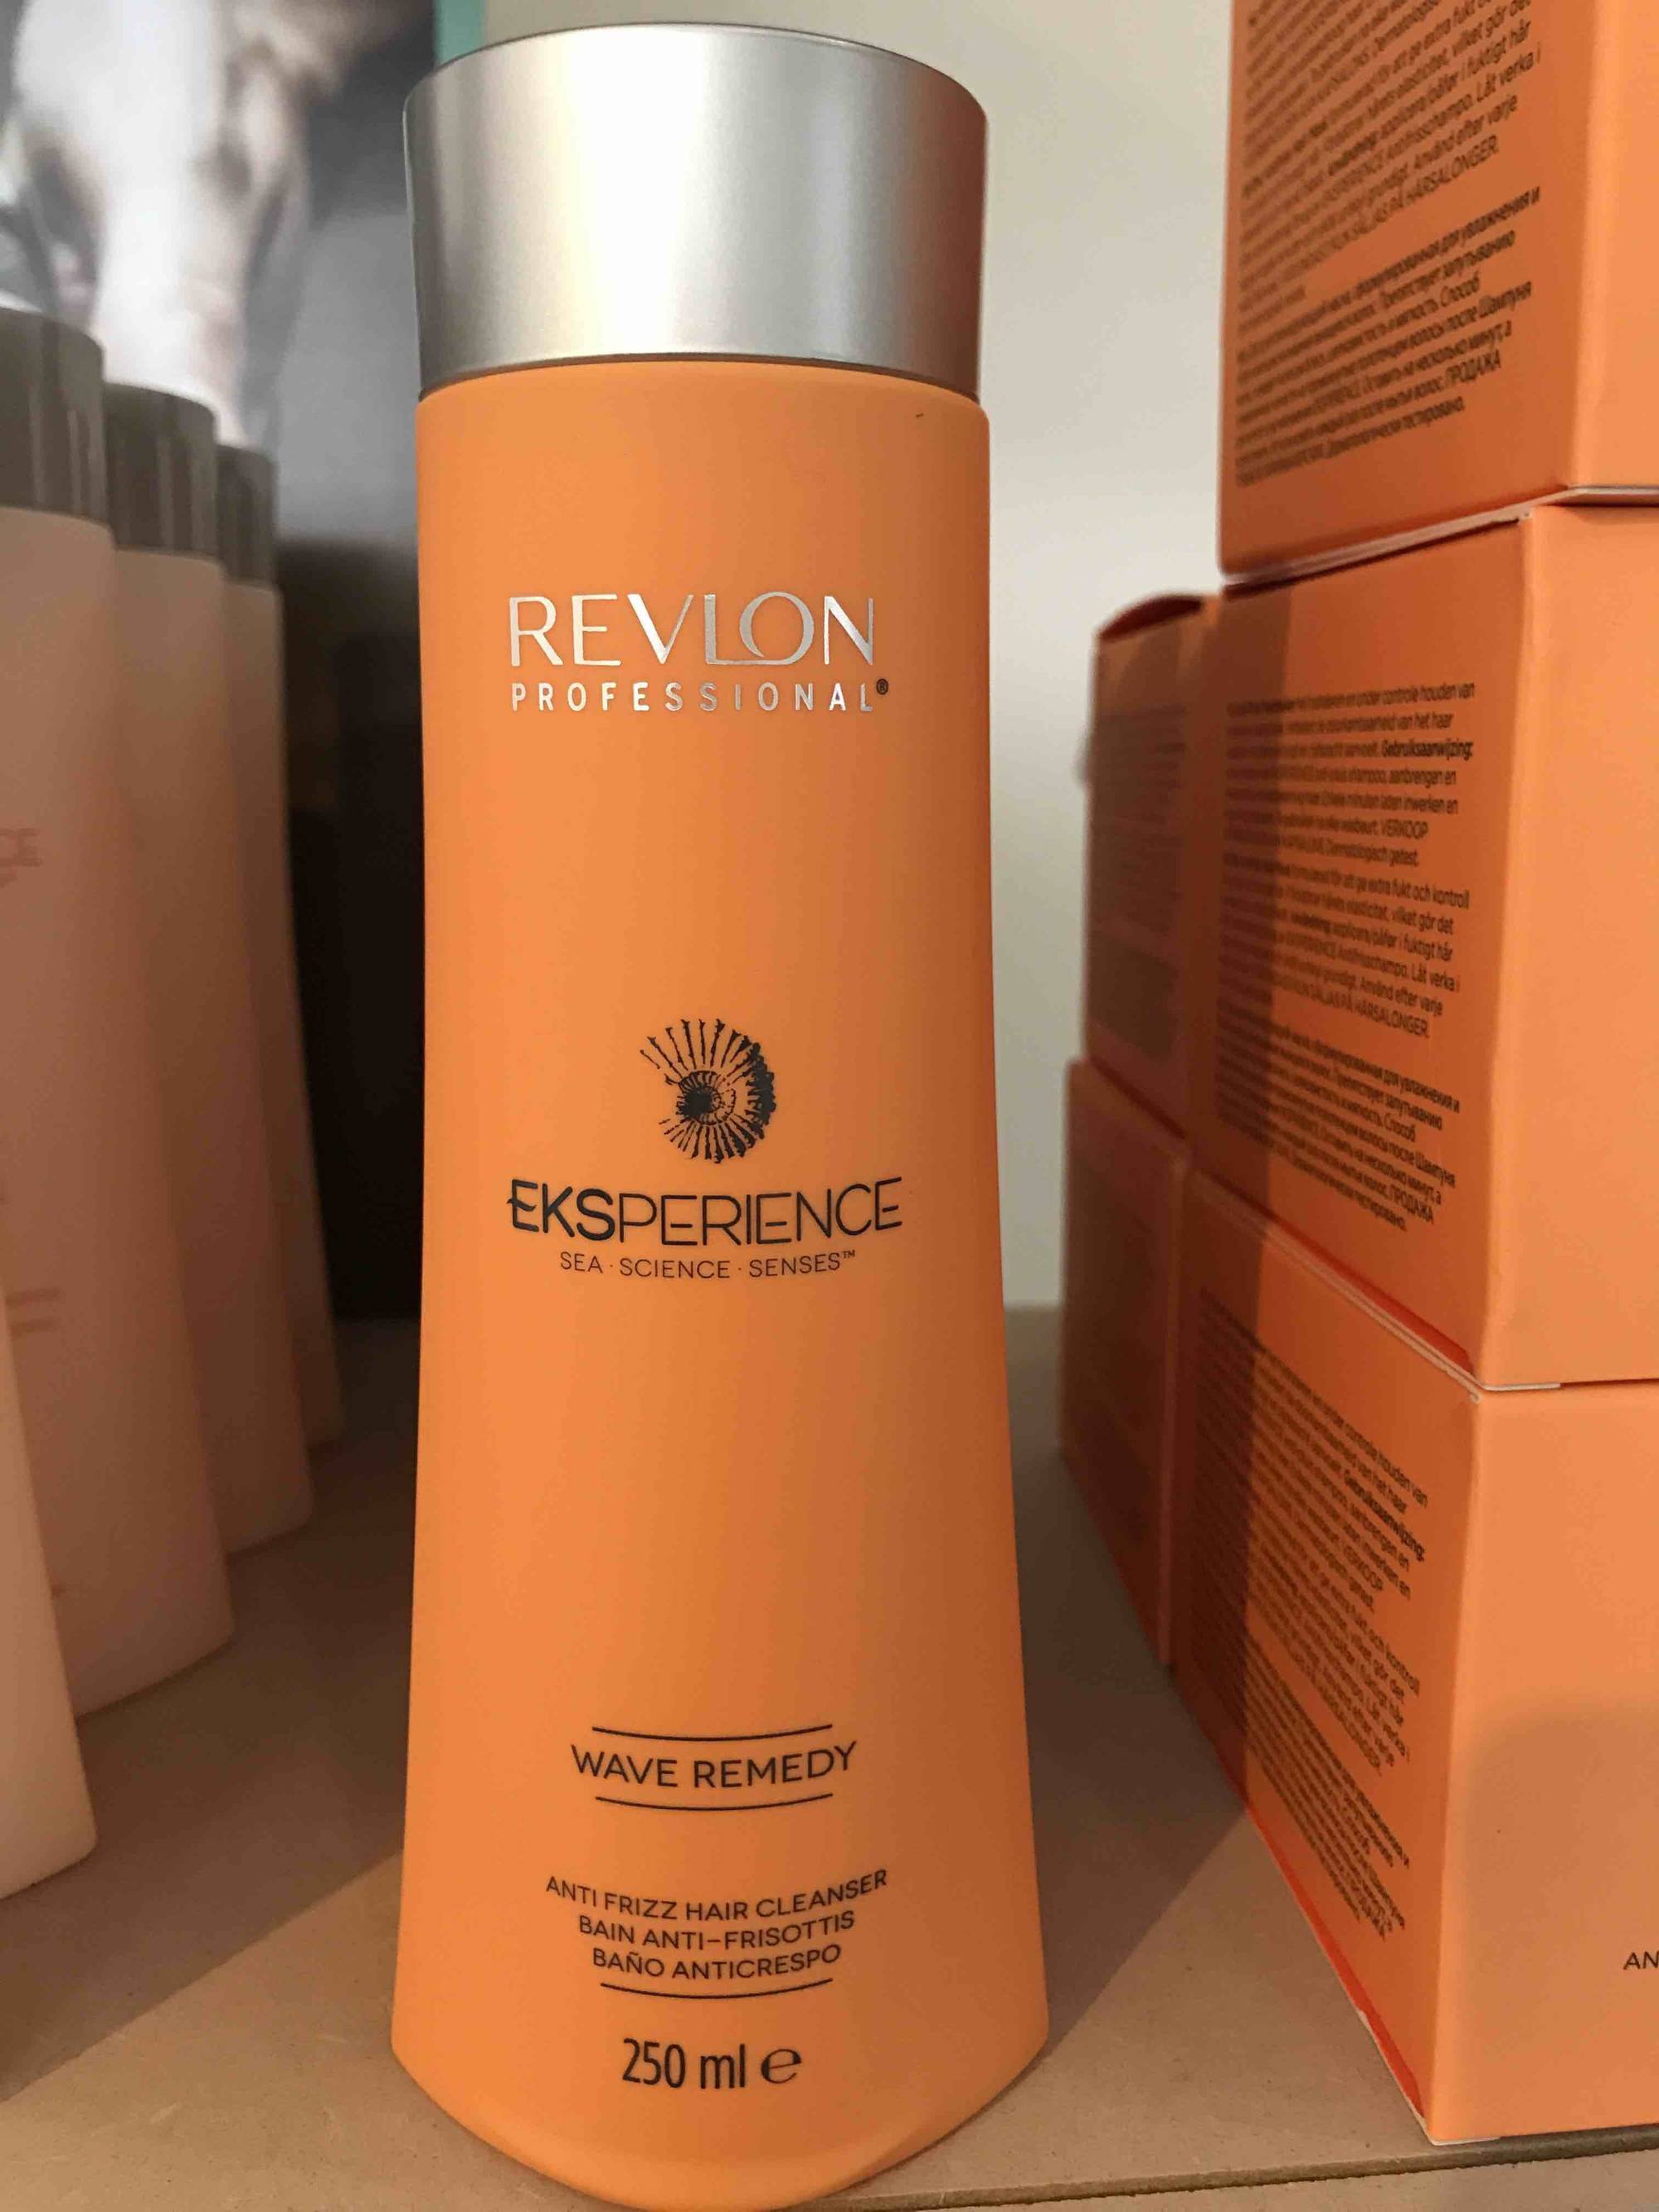 REVLON - Eksperience - Anti-frizz hair cleanser